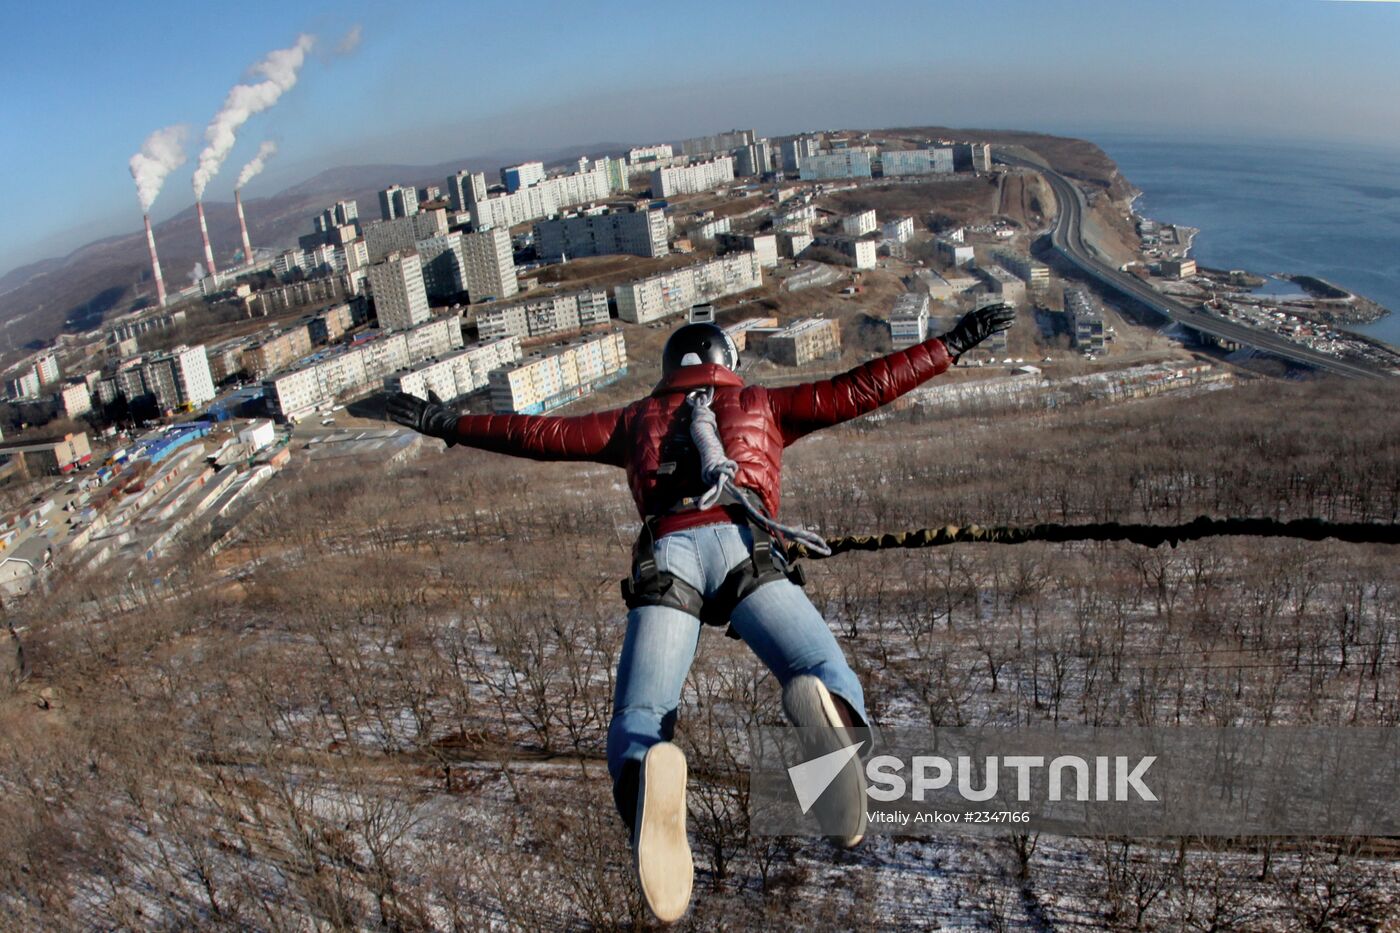 Day of Rope Jumping in Vladivostok